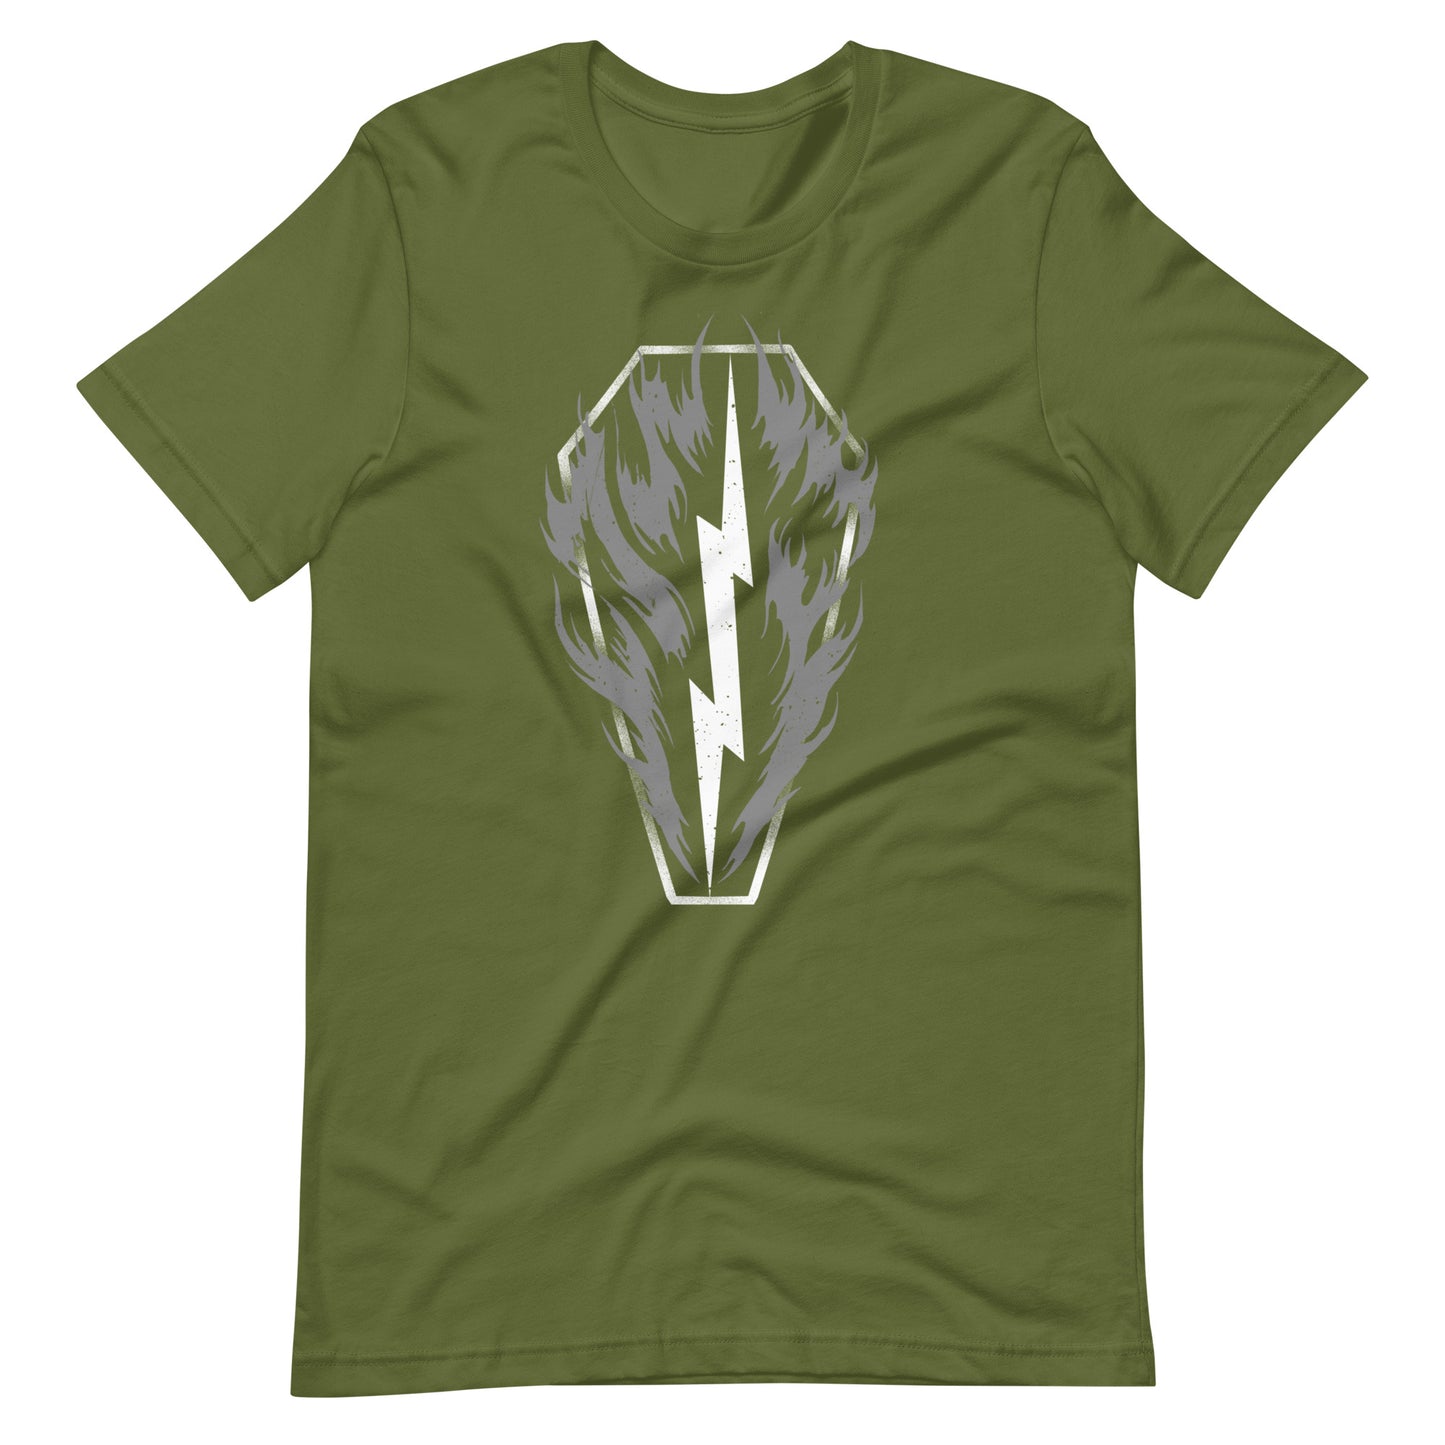 Thunder - Men's t-shirt - Olive Front